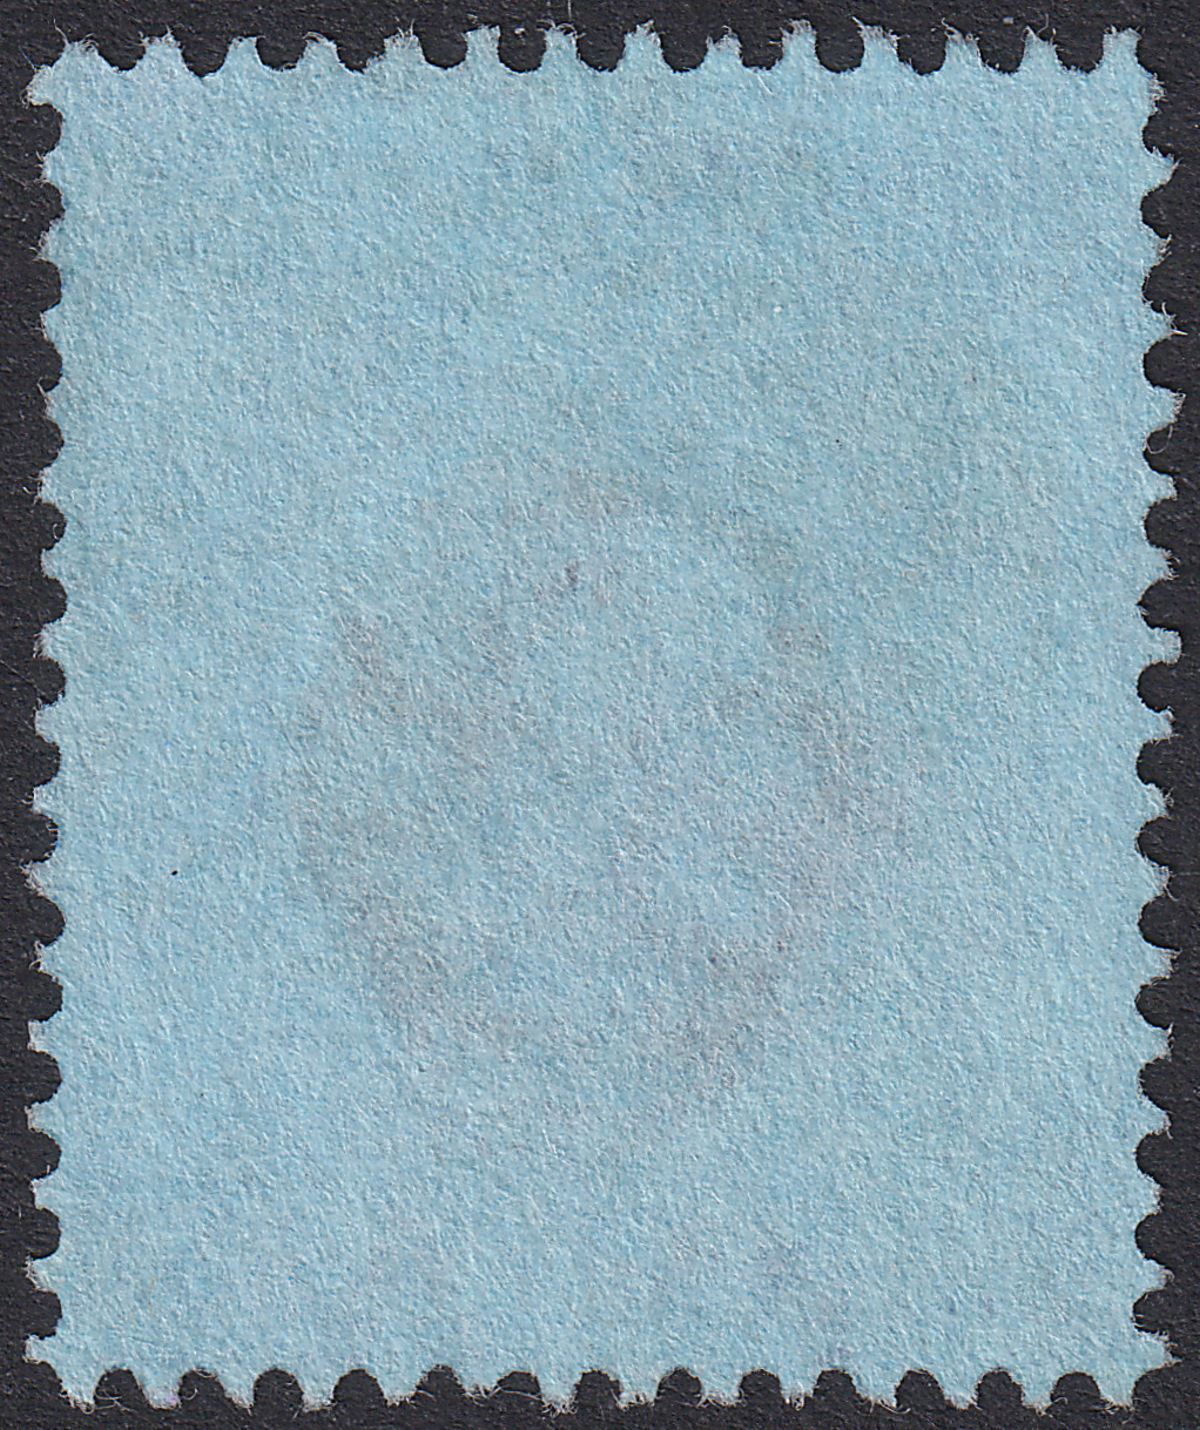 Hong Kong 1903 KEVII 10c Used with Oval of Diamond Dots Postmark SG67